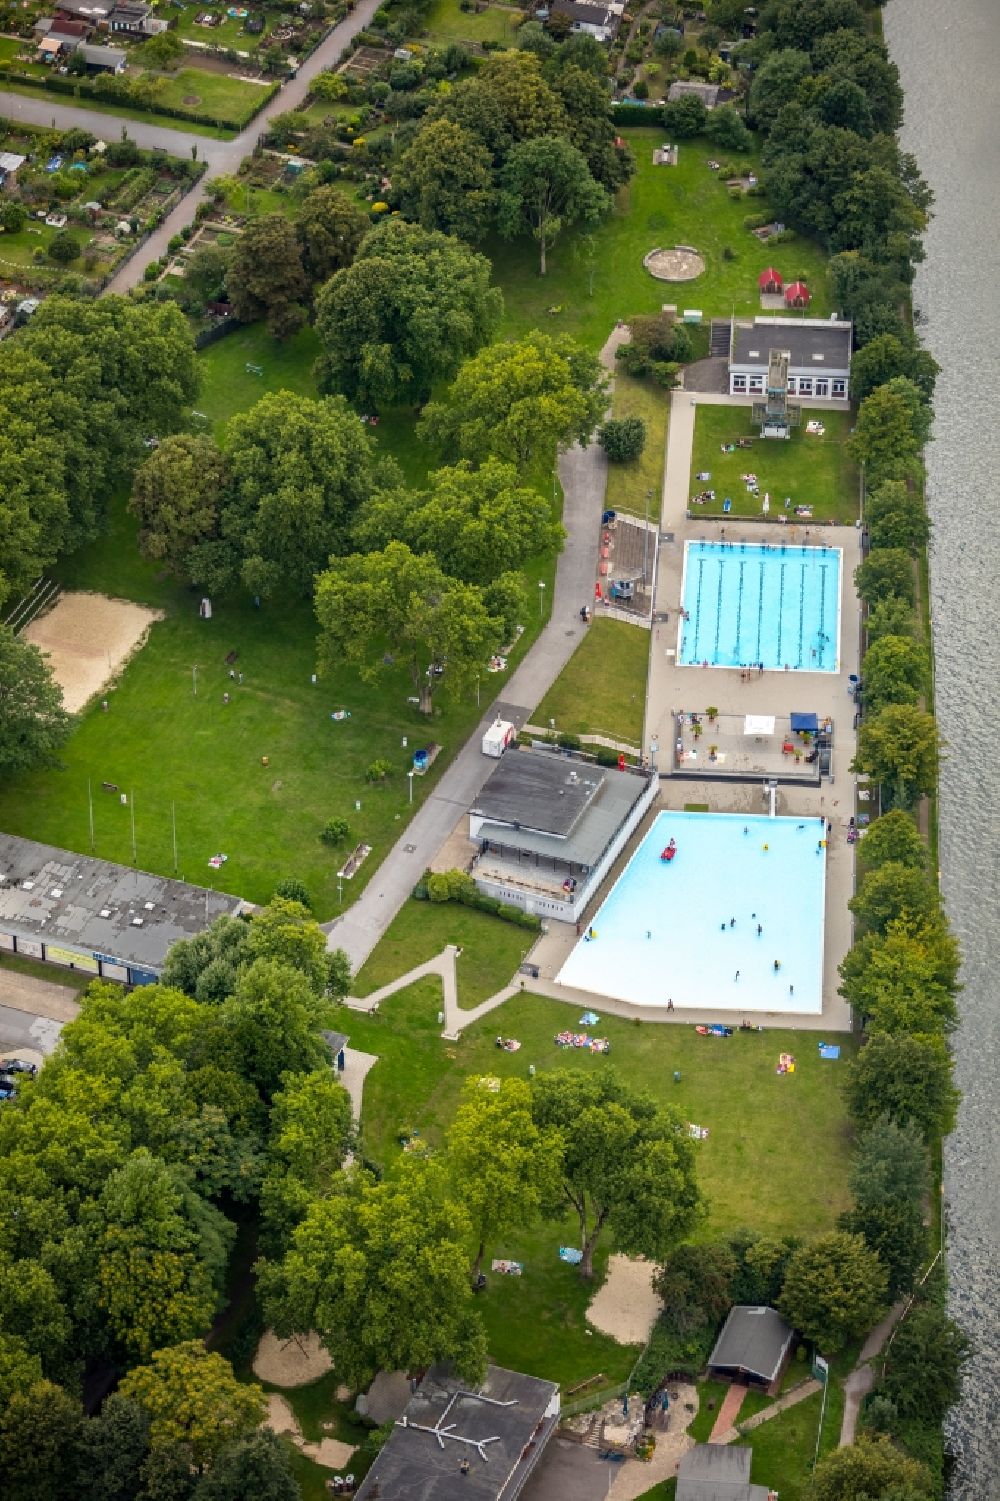 Aerial image Essen - Swimming pool of the Freibad Dellwig Hesse on Scheppmannskonp in Essen in the state North Rhine-Westphalia, Germany